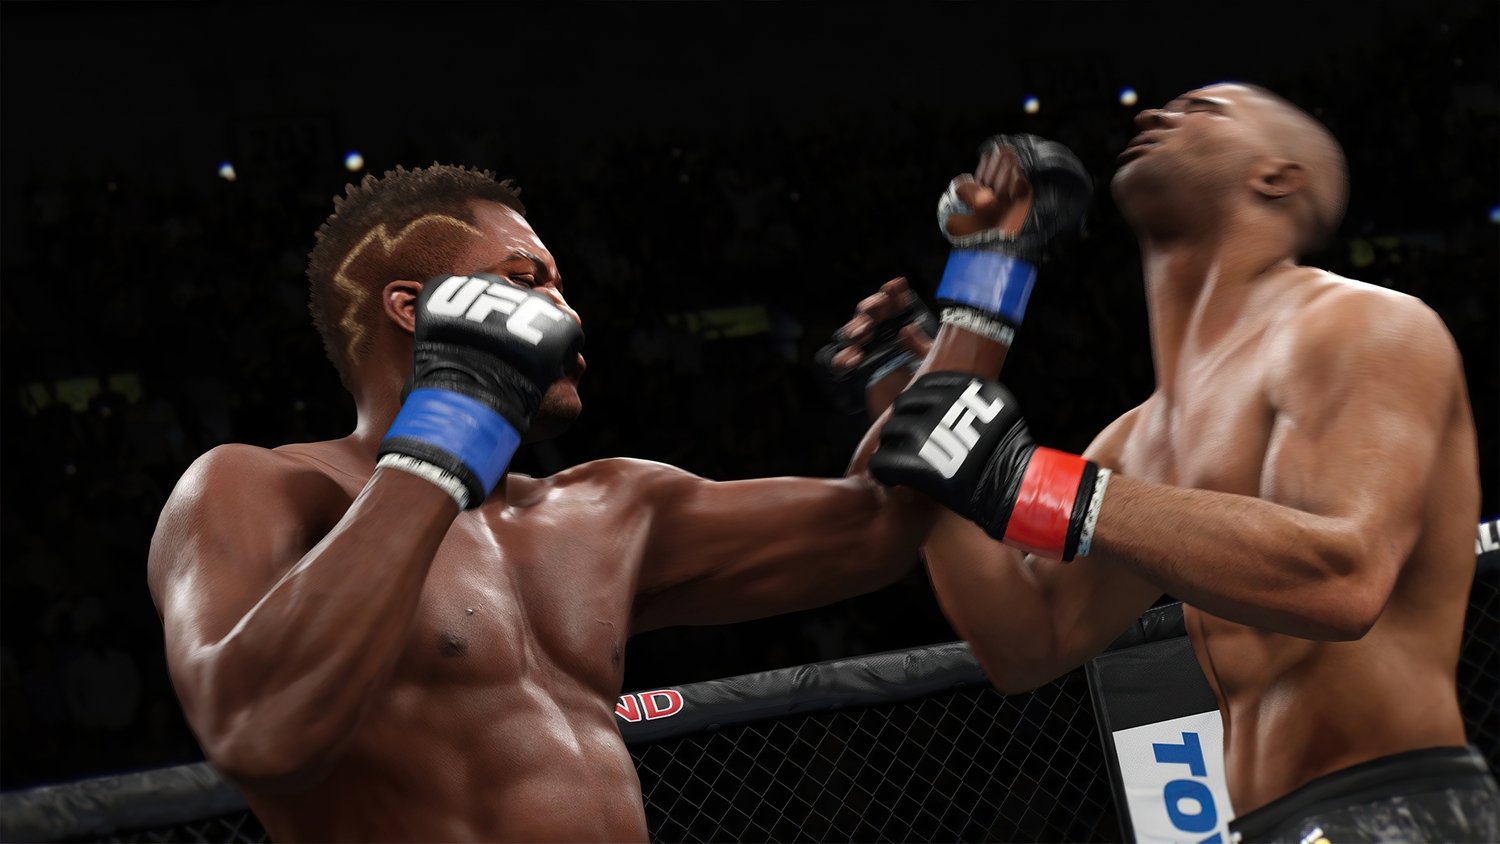 Игра EA SPORTS UFC 3 (PS4, Русские субтитры) фото 